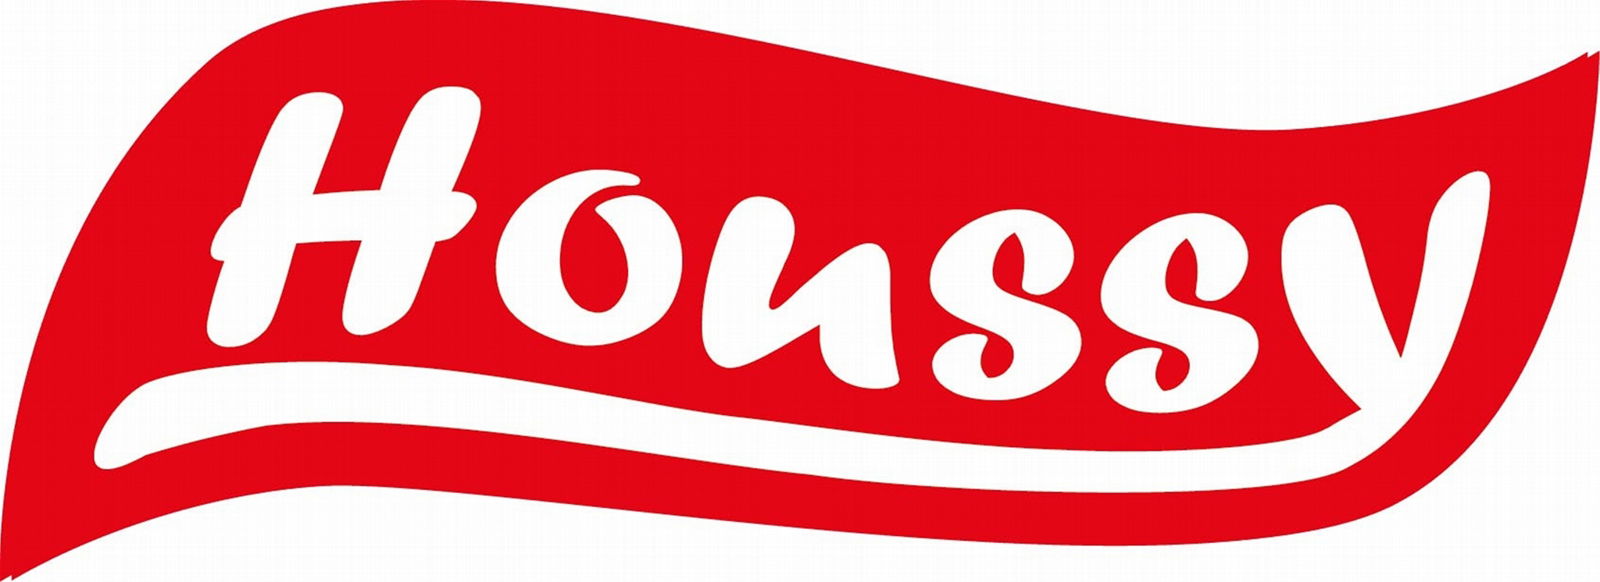 Houssy Drinks Co.,Ltd